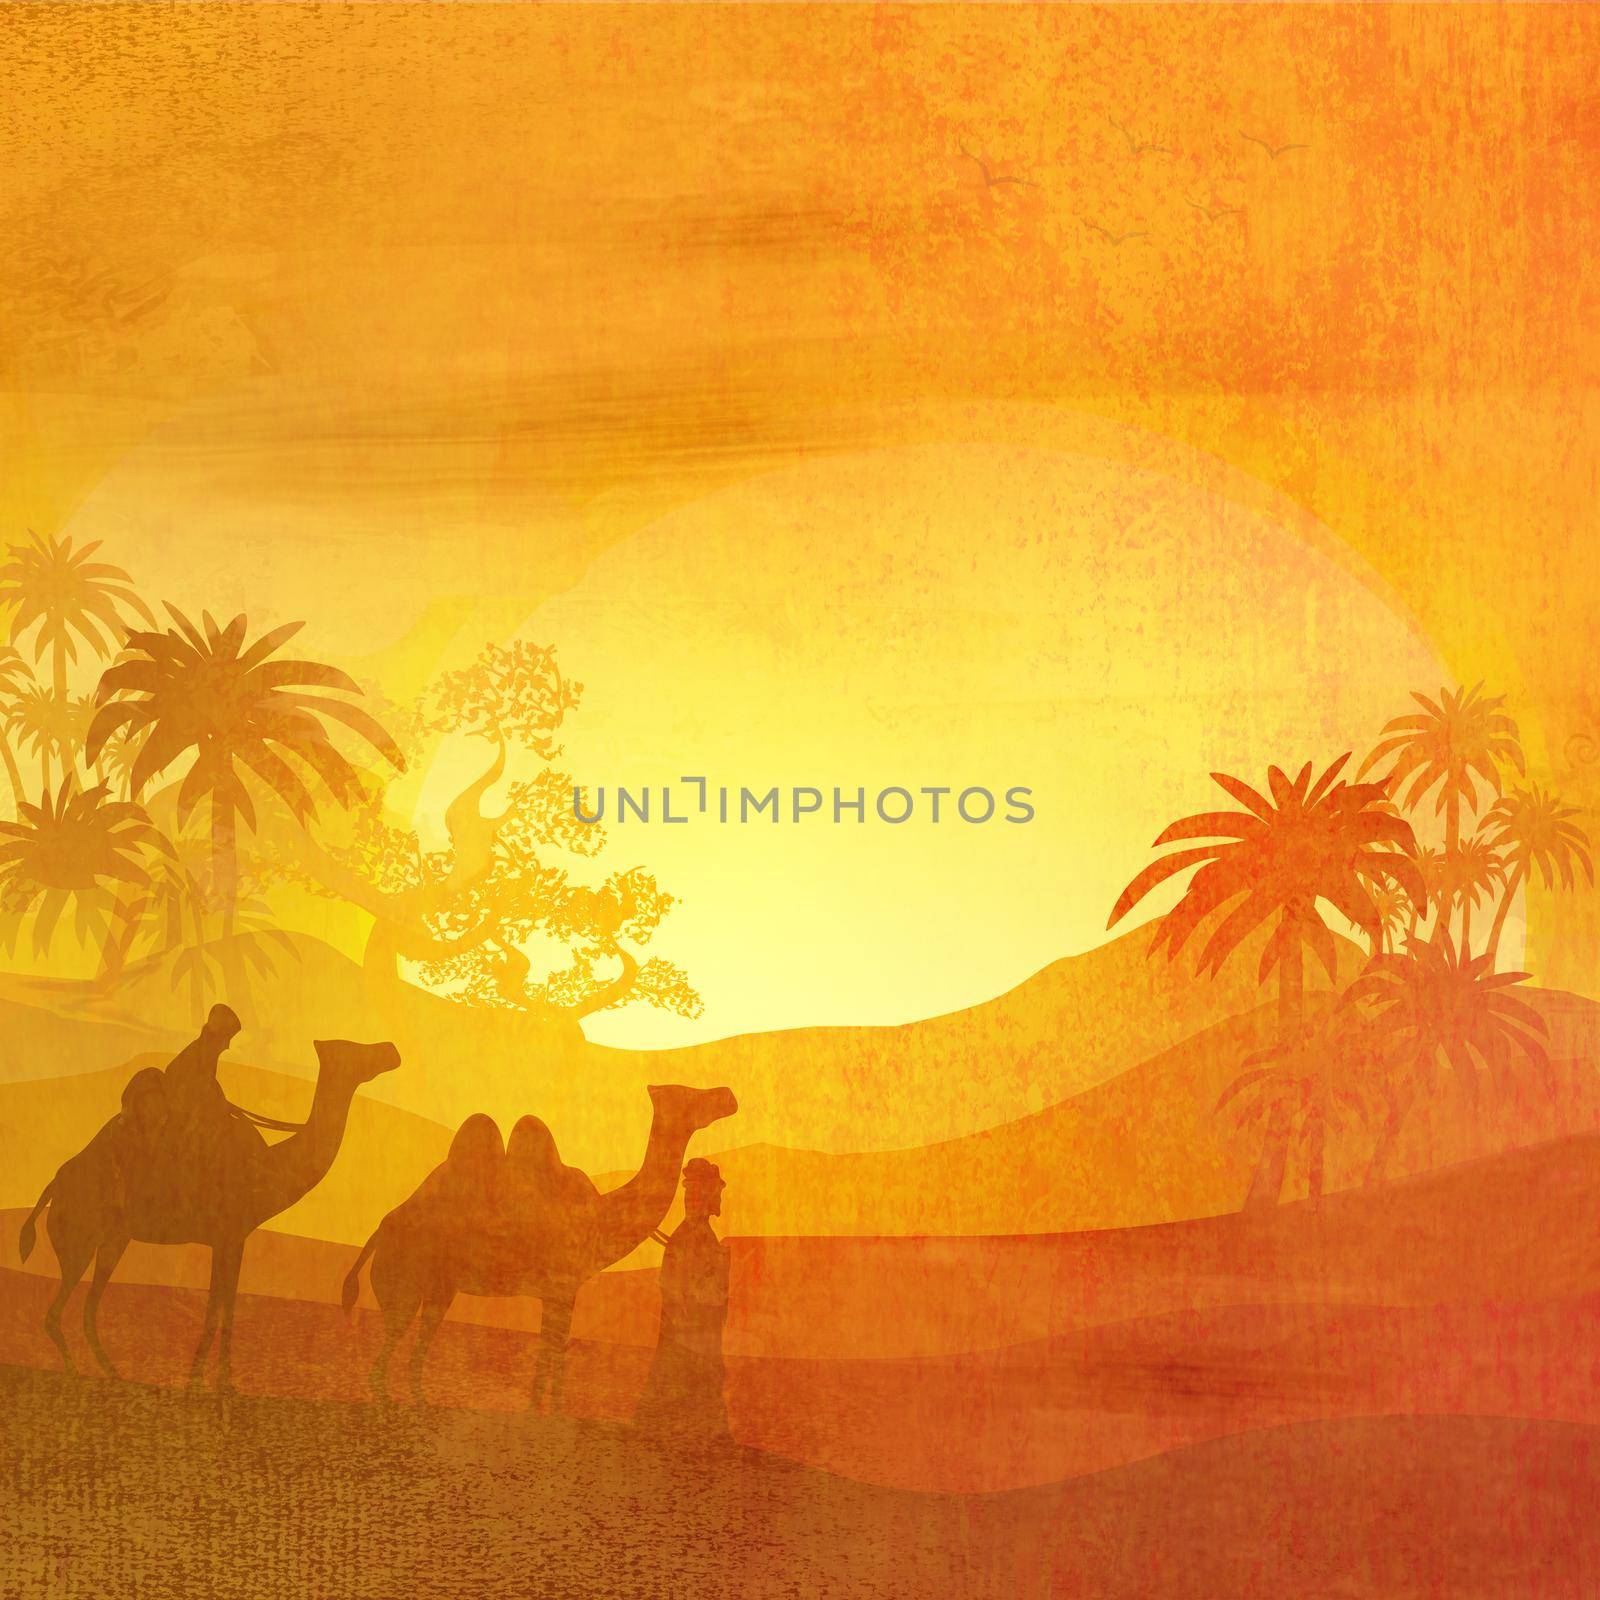 Bedouin camel caravan in wild africa landscape - artistic grunge illustration